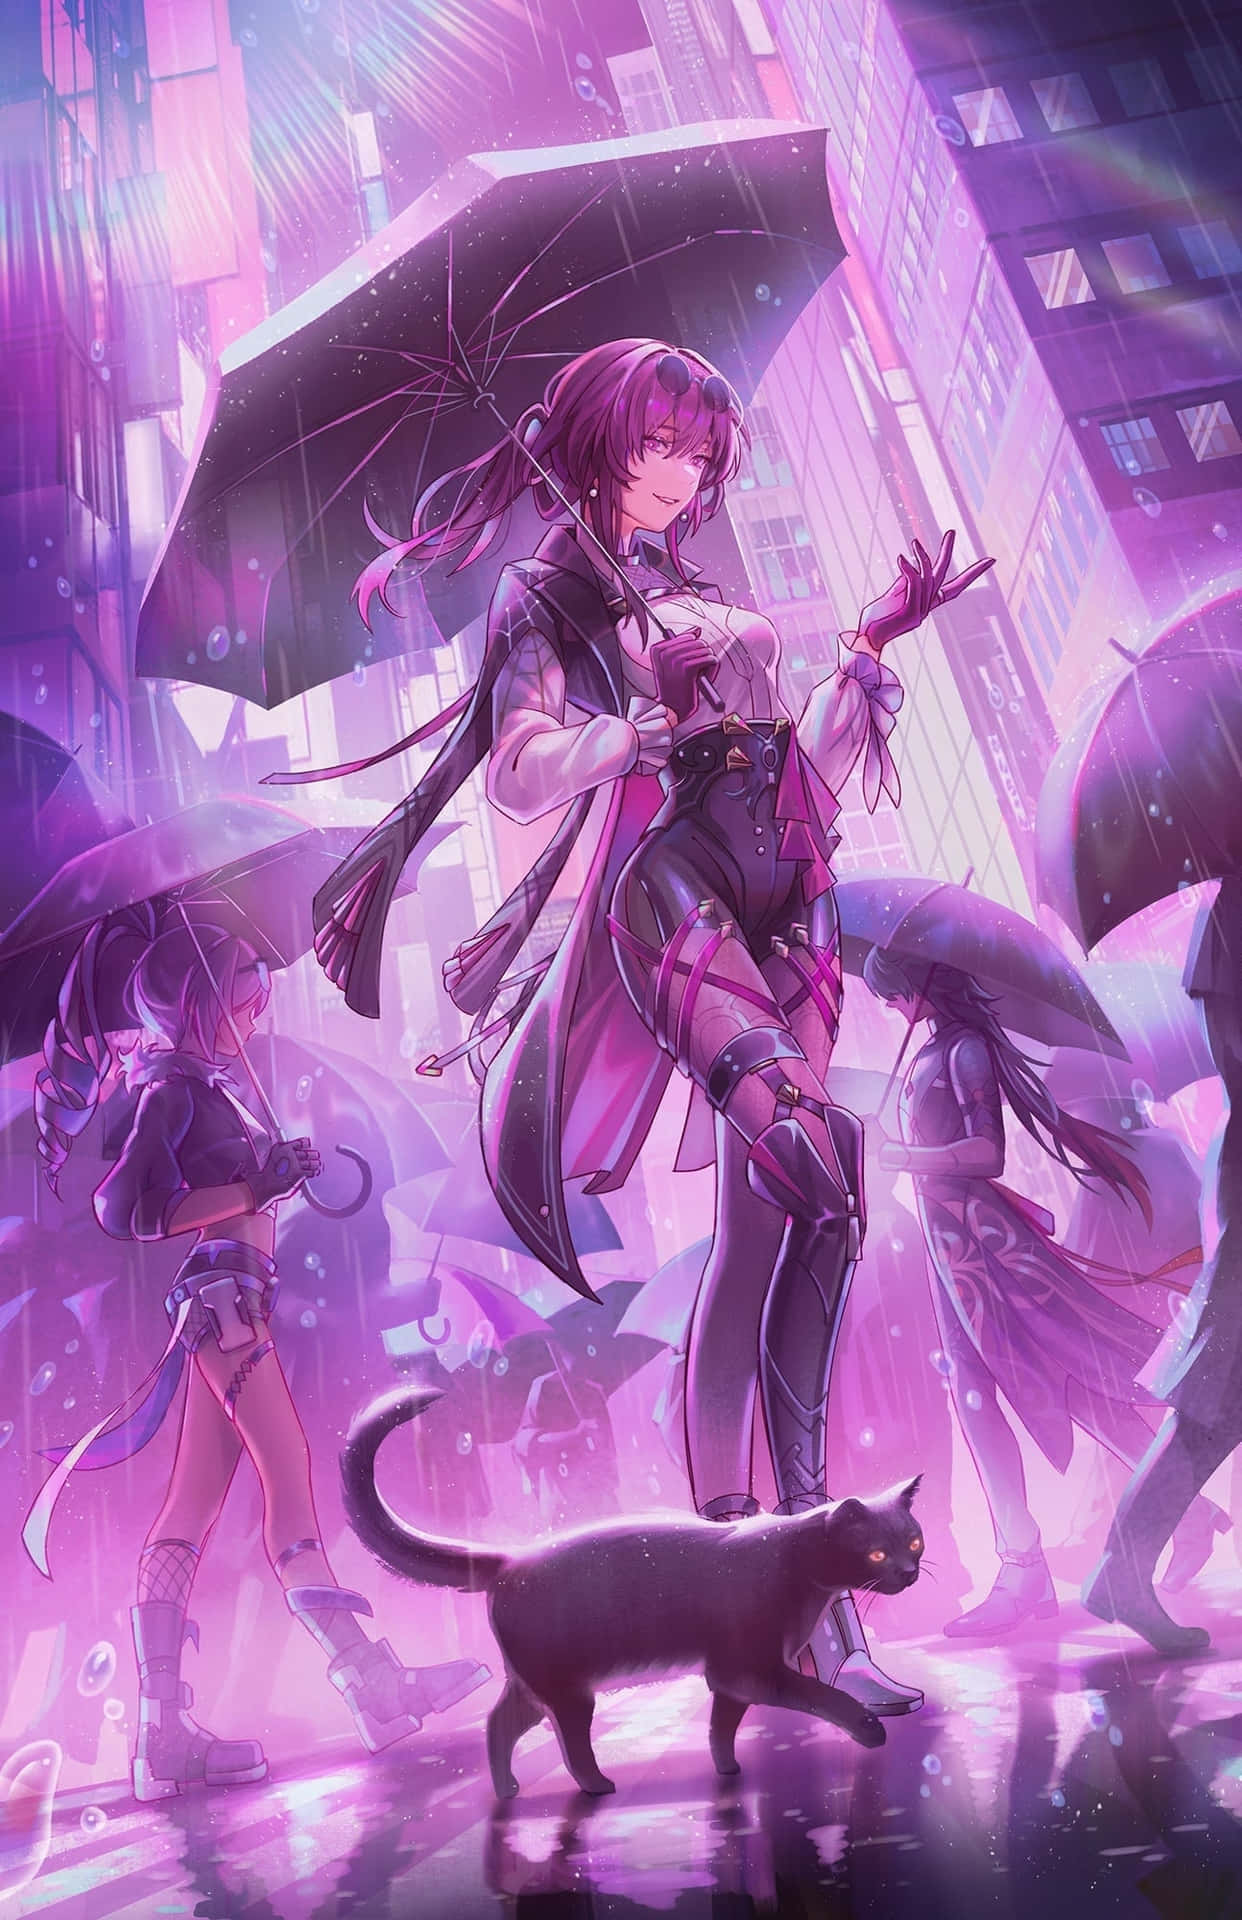 Cyberpunk Rainy Cityscapewith Charactersand Cat.jpg Wallpaper